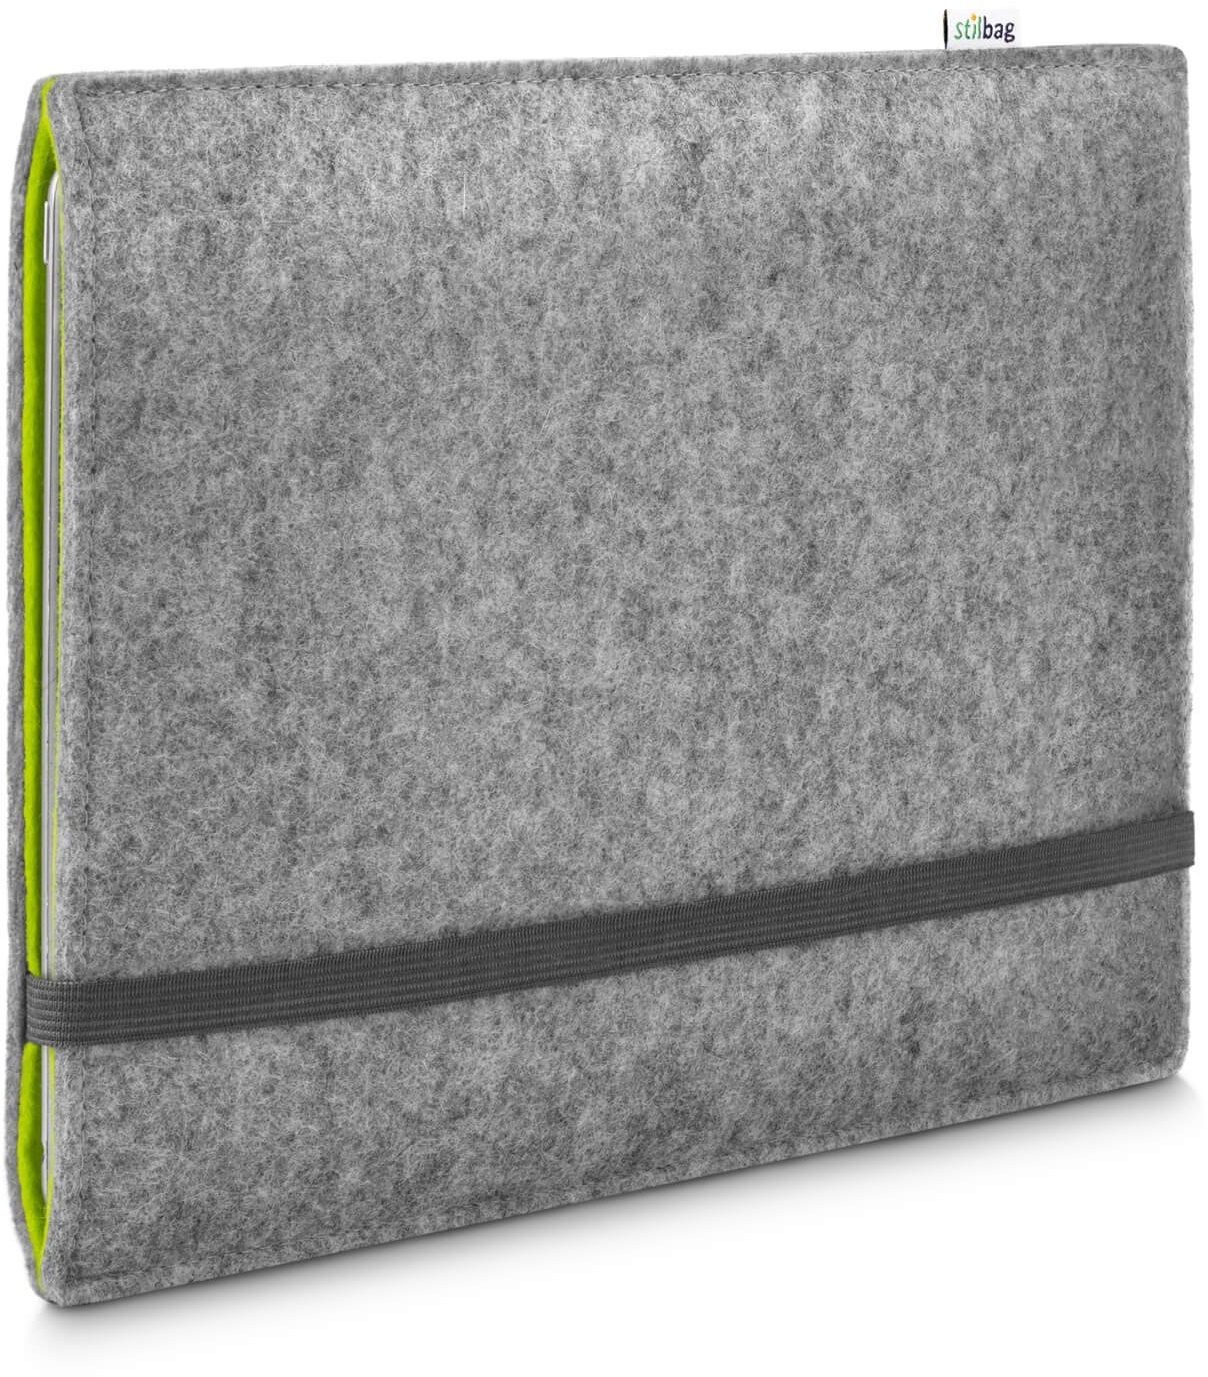 Stilbag Filzhülle für Apple iPad Mini (2021) (6th Generation) | Etui Tasche aus Merino Wollfilz | Kollekion Finn - Farbe: hellgrau/apfelgrün | Tablet Schutzhülle Made in Germany